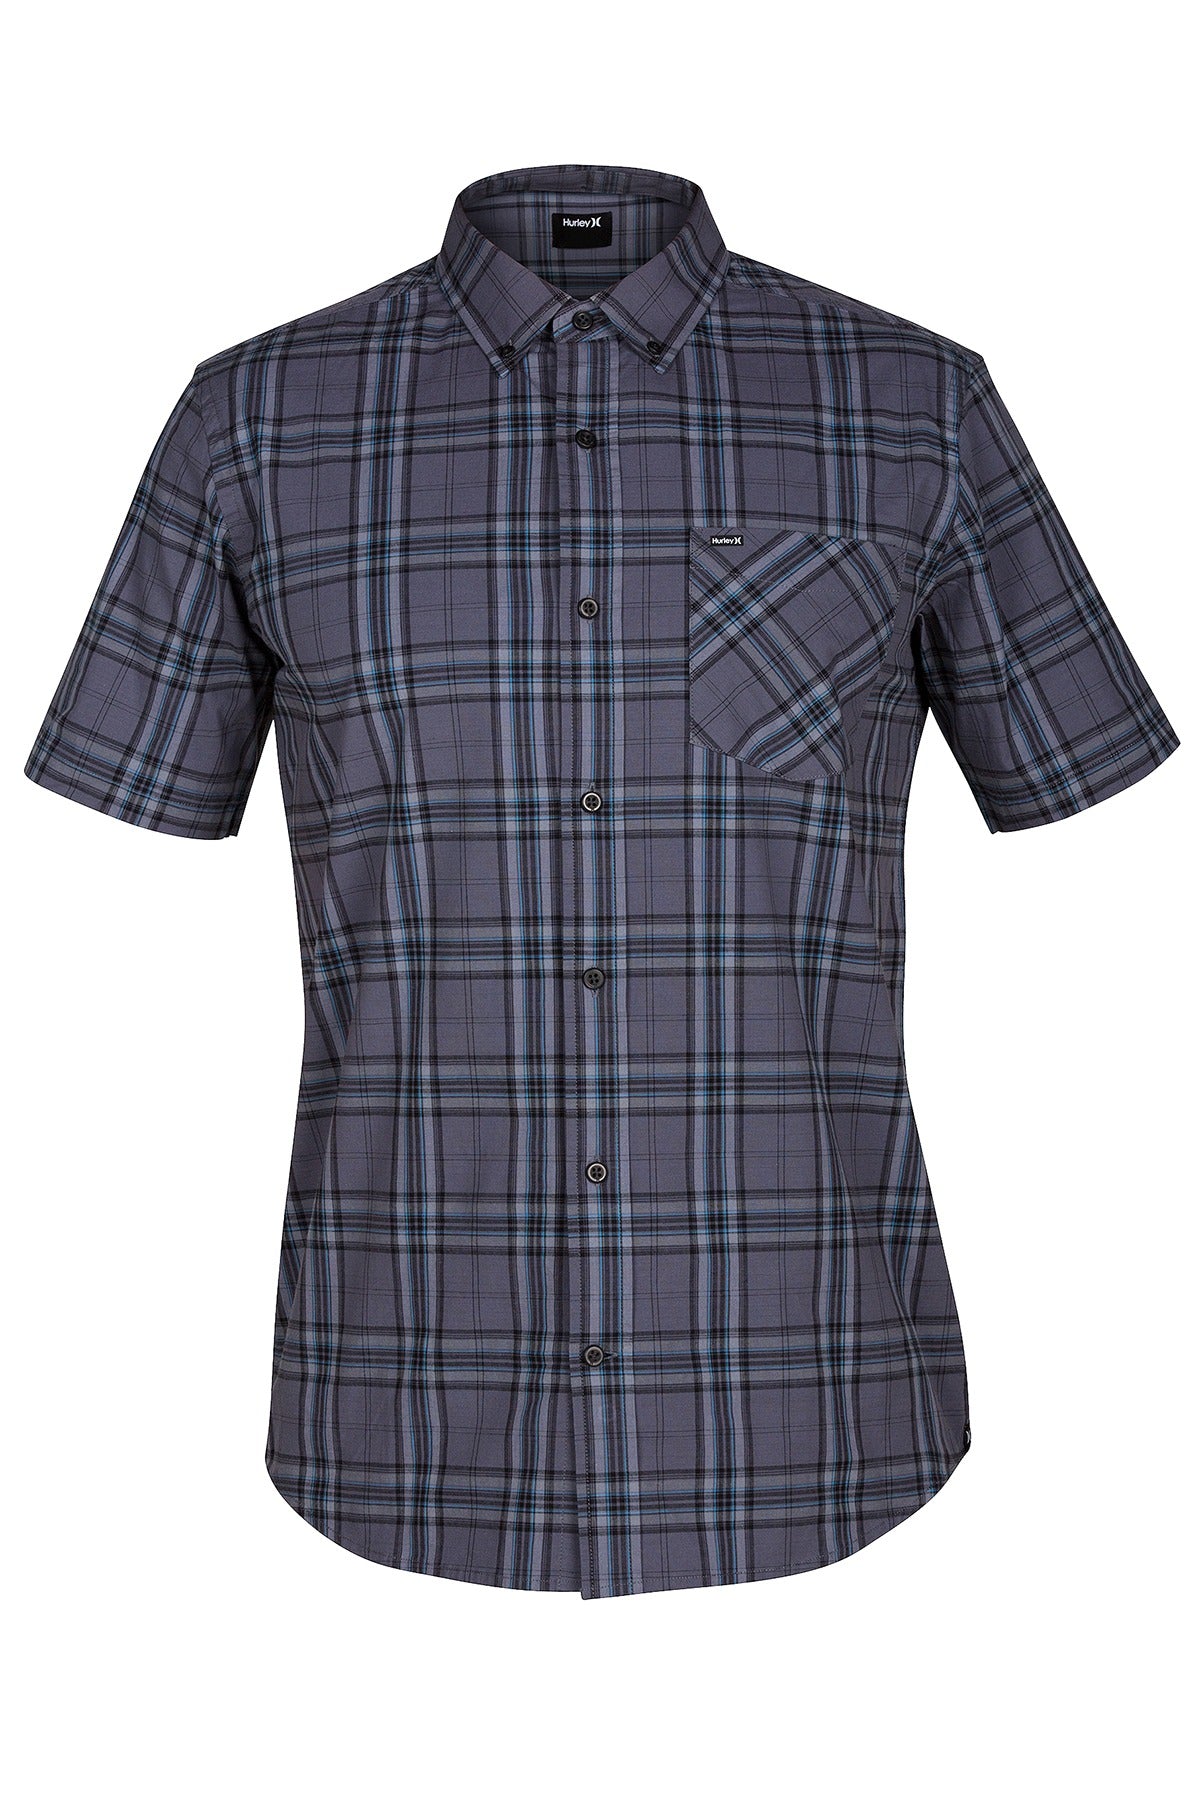 Hurley Charcoal/Black Landfall Plaid Pocket Shirt | CheapUndies